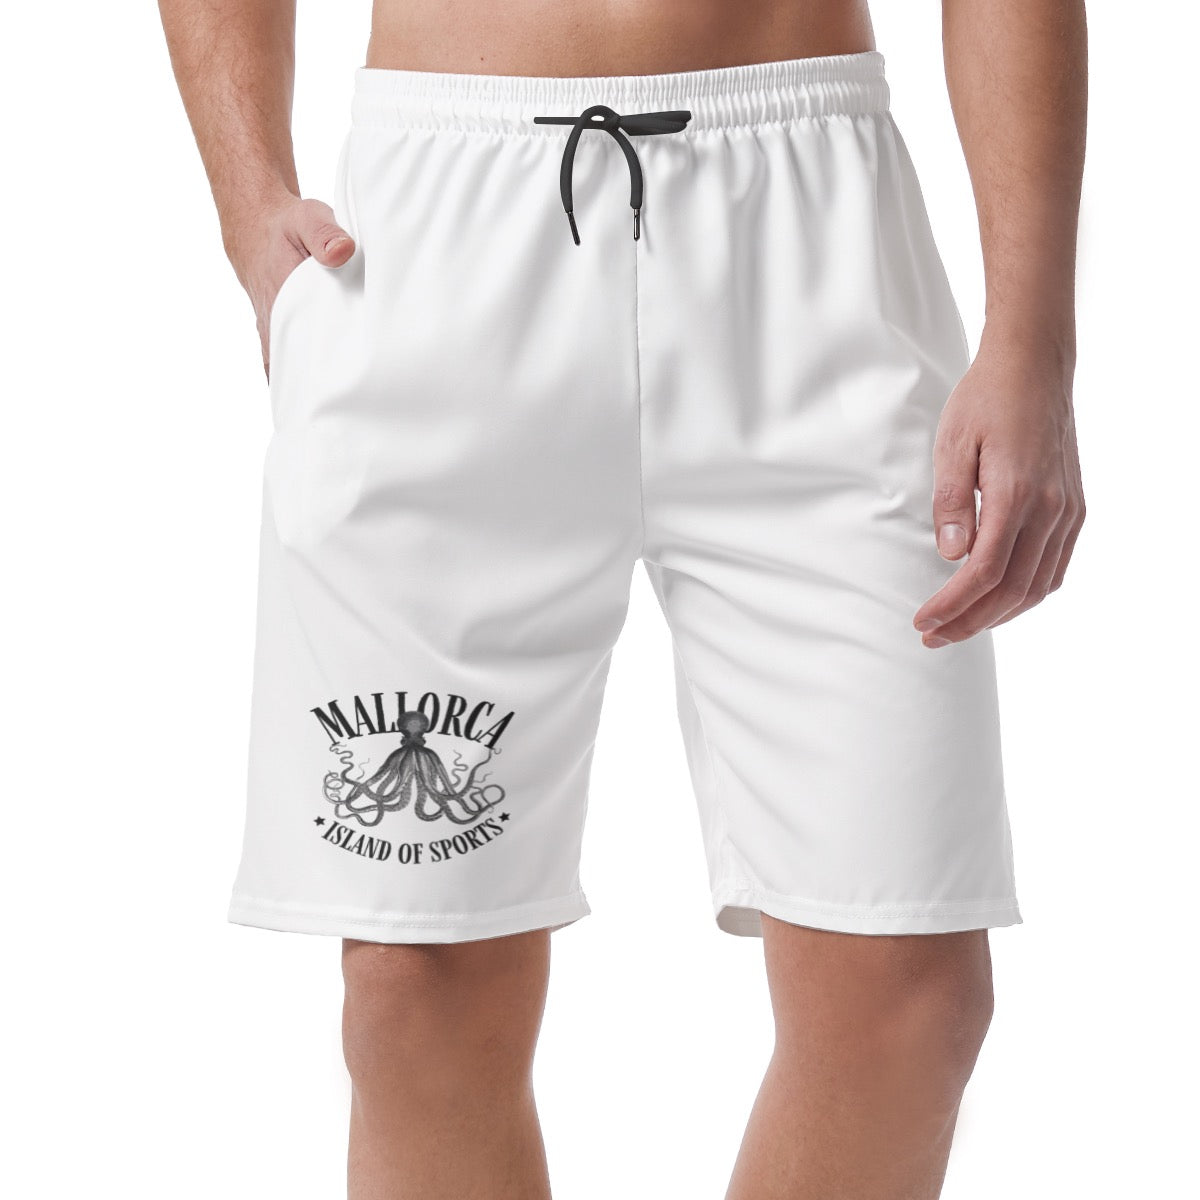 Mallorca Island of Sports Men's Casual Shorts